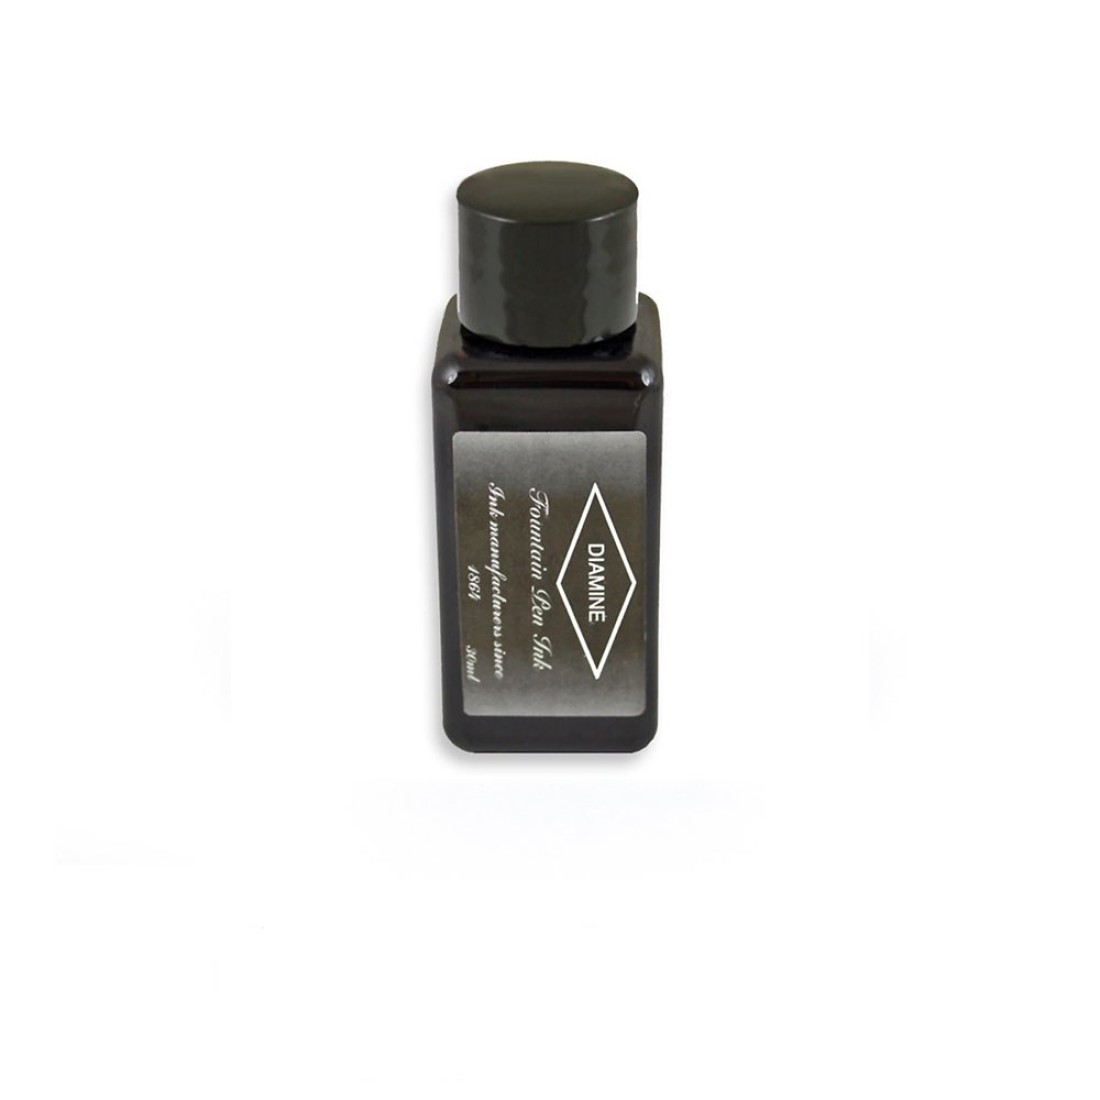 Diamine Ink - 30ml Ink Bottle (101 colors)